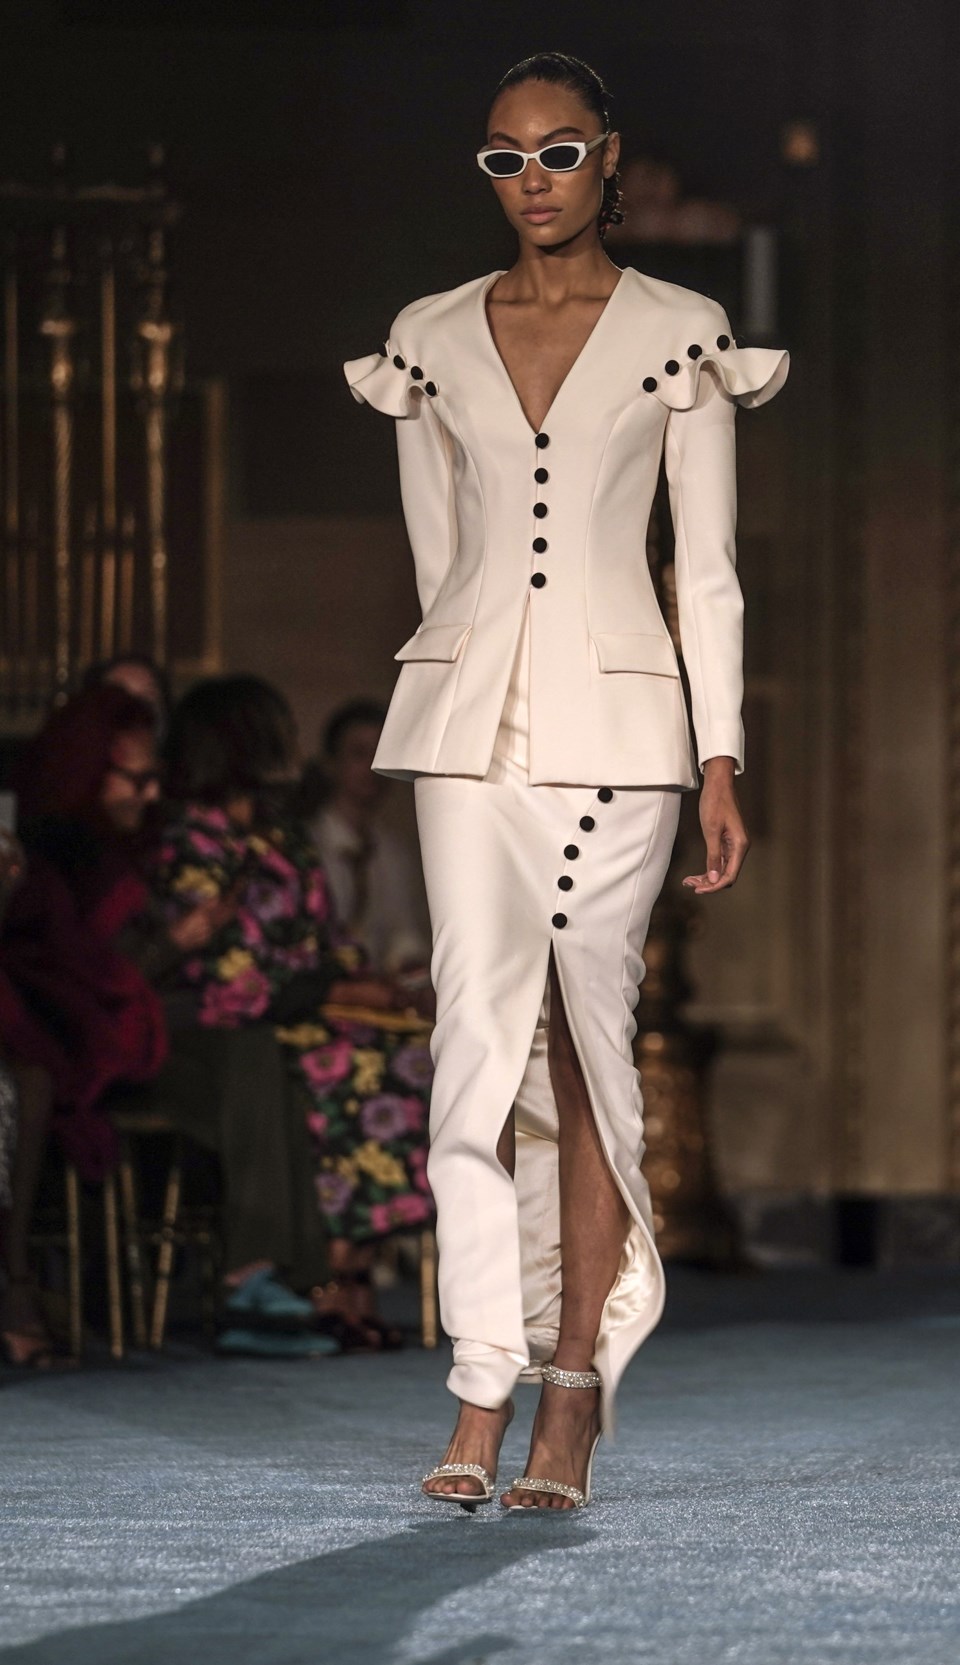 Photos: Christian Siriano kicks off New York Fashion Week 